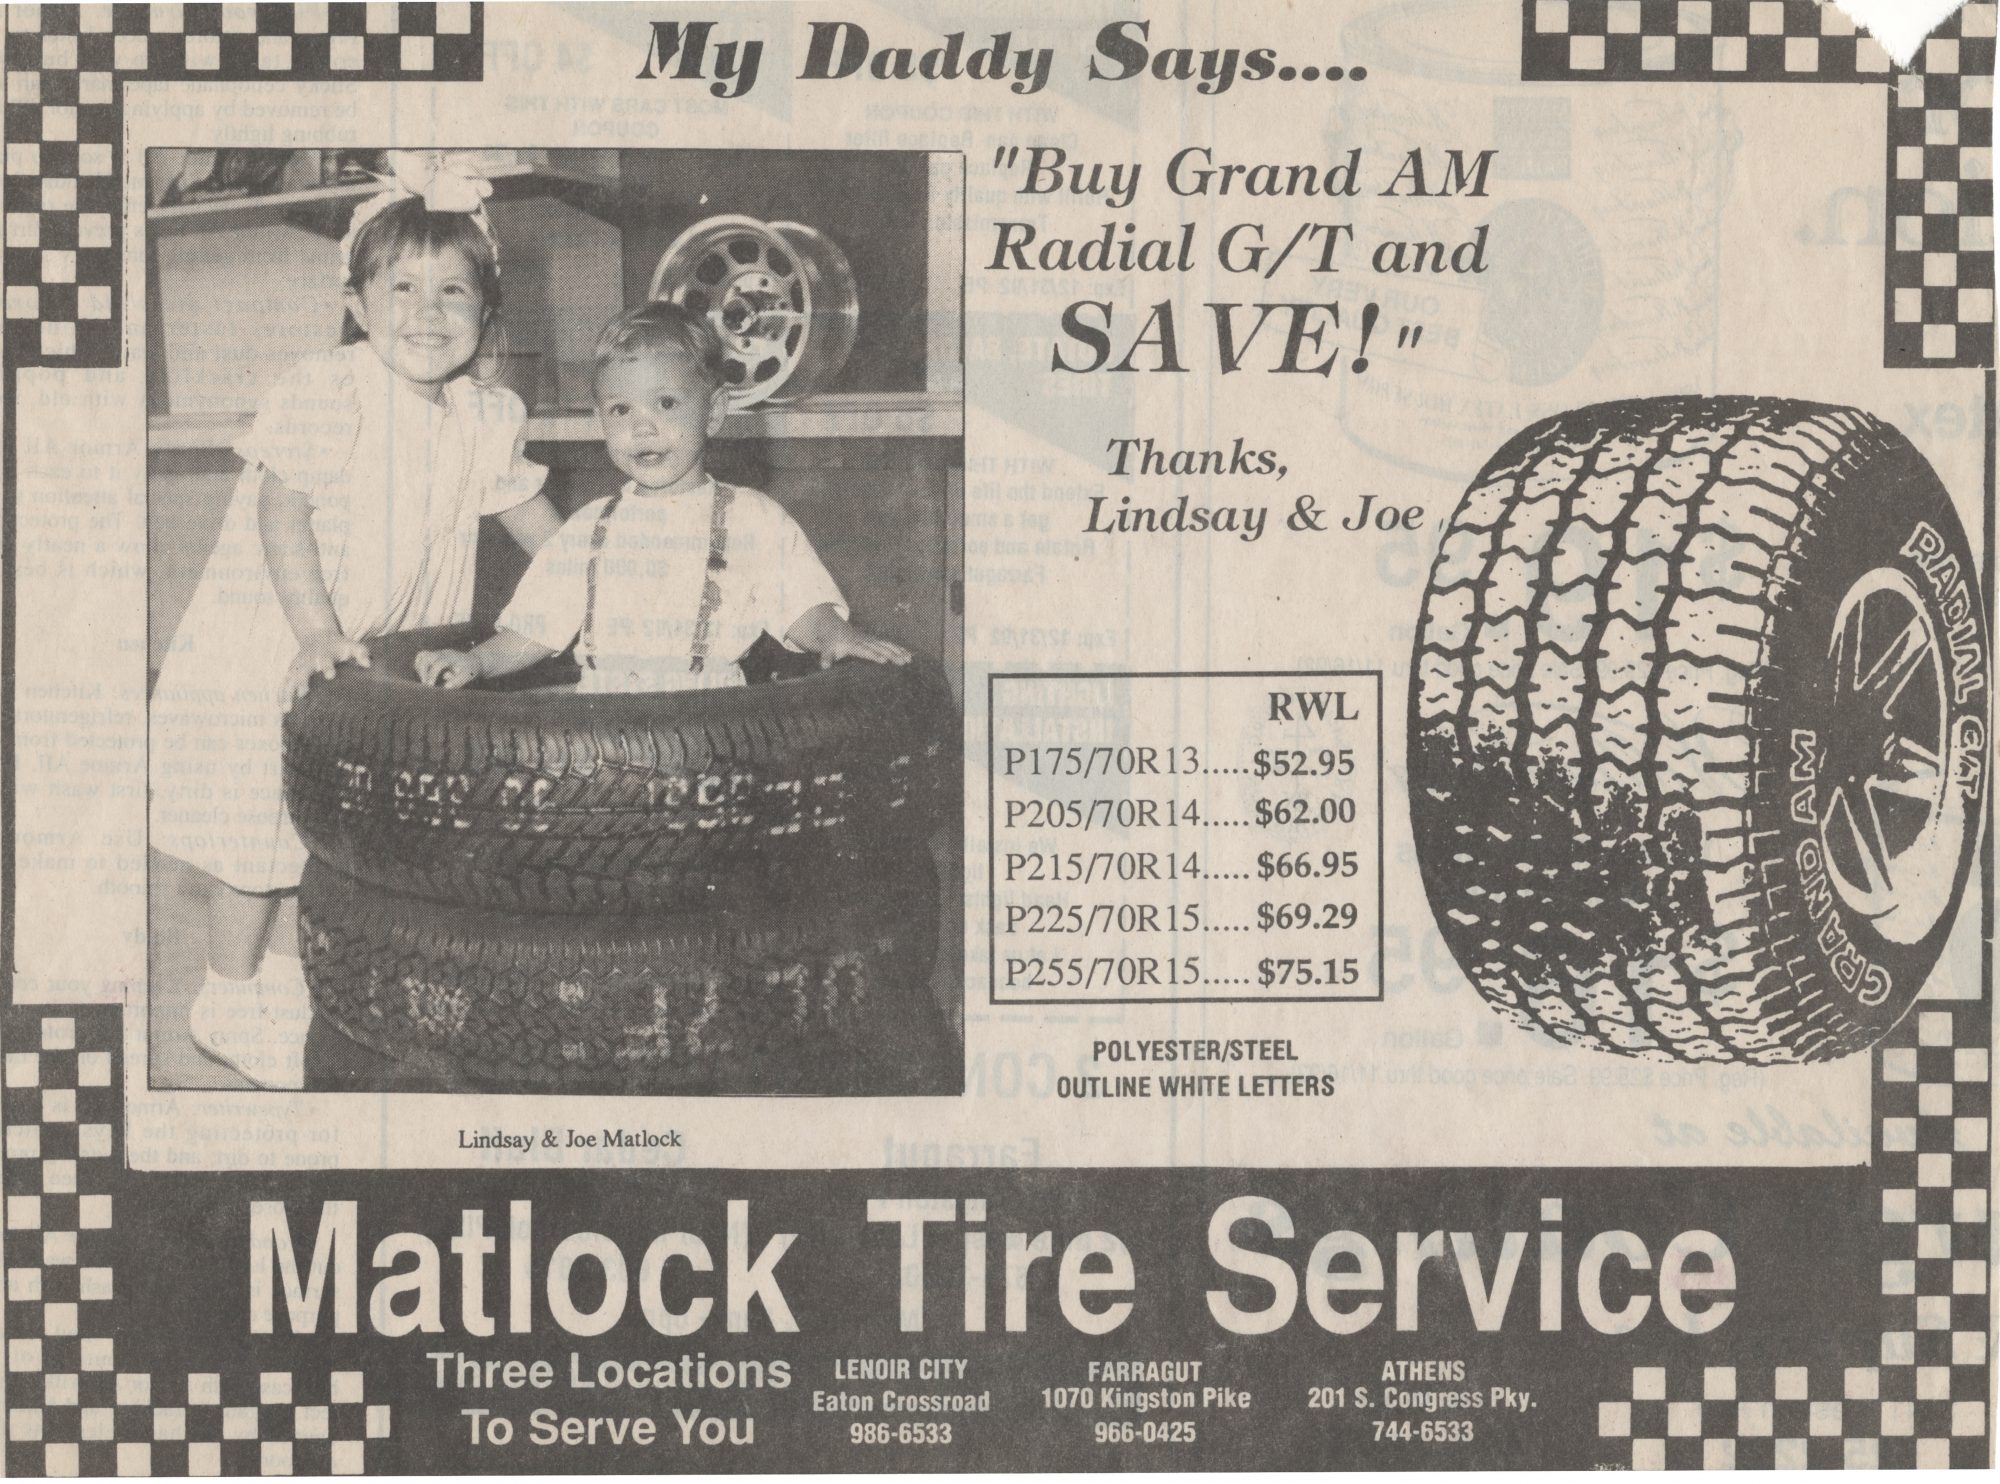 lindsay and joe matlock in newspaper ad